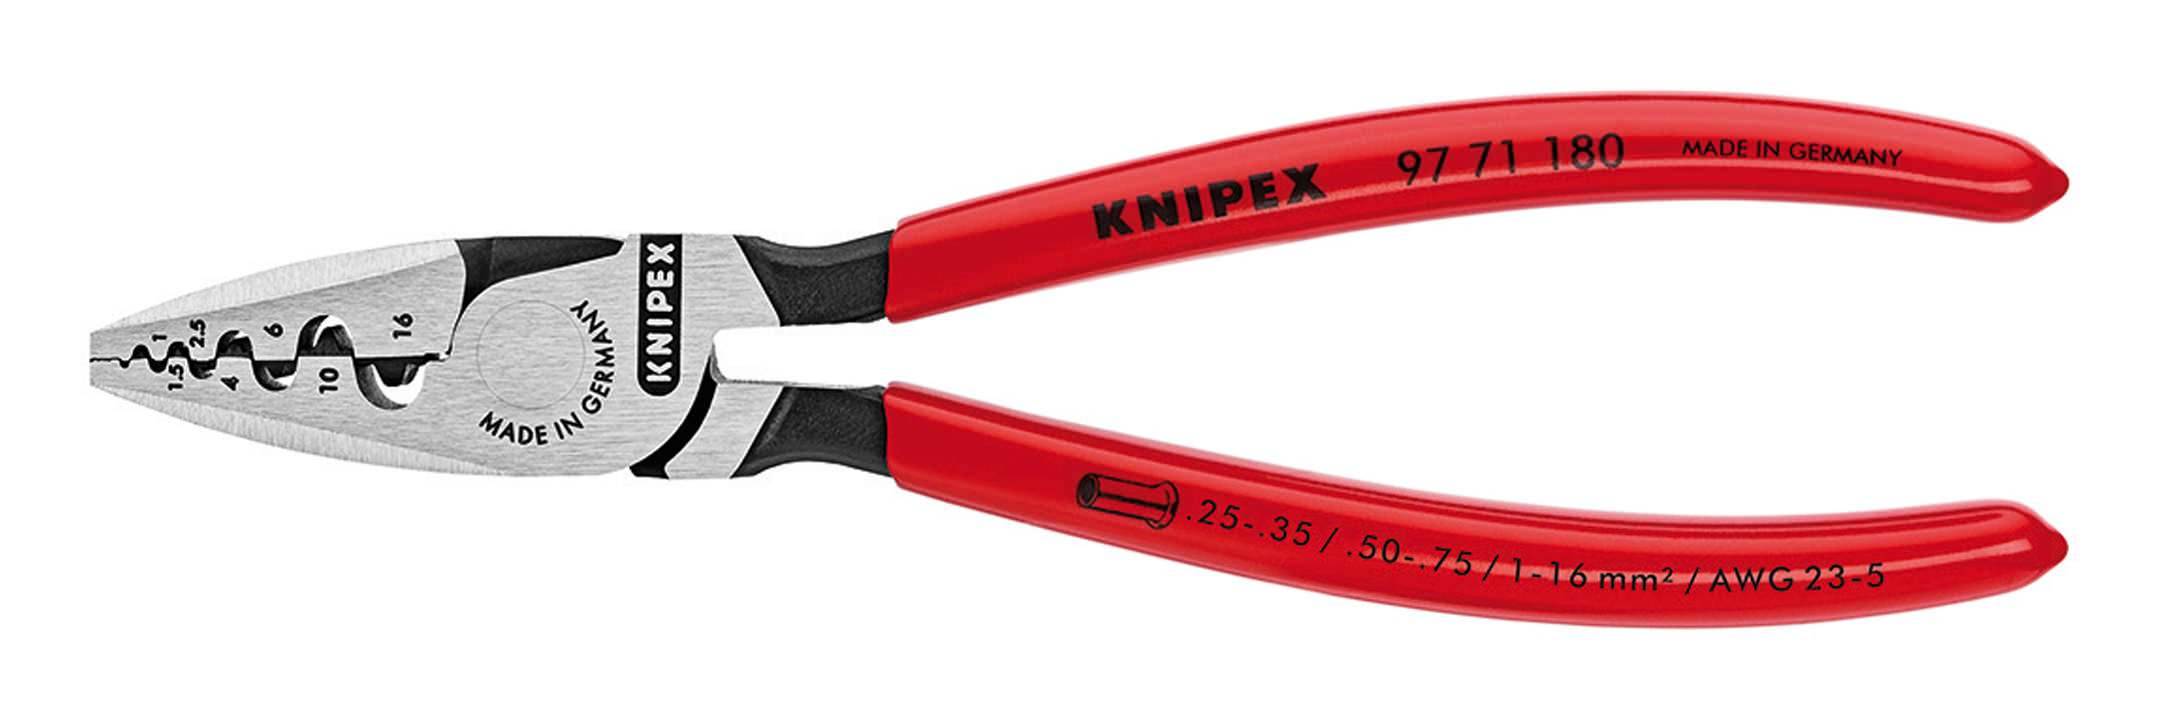 Knipex Aderendhülsenzange 180mm poliert | 97 71 180